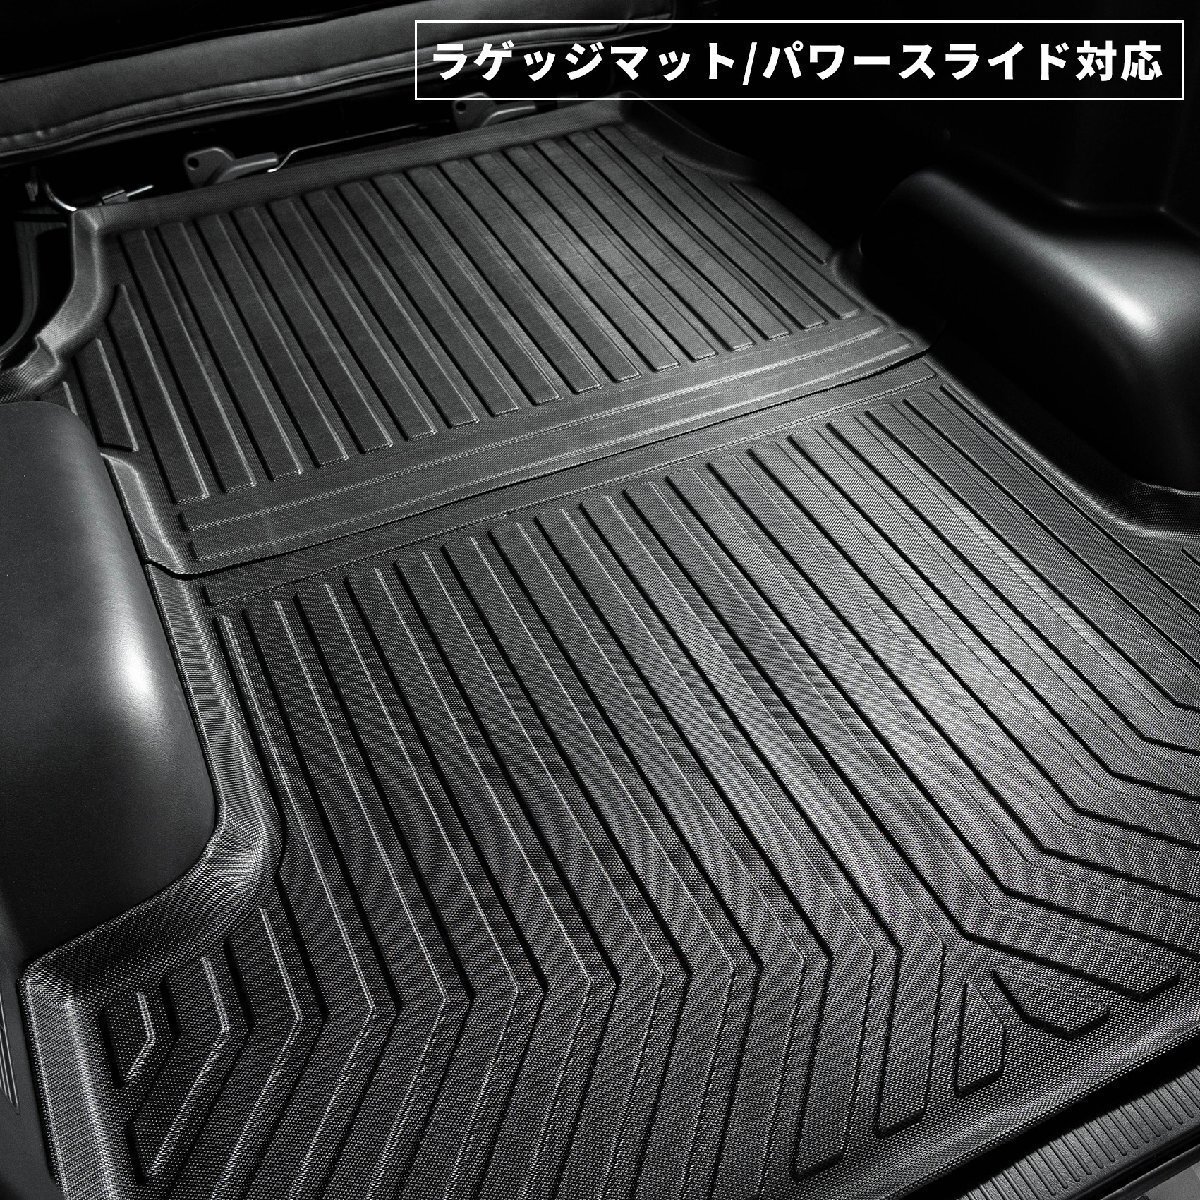  limited amount \\1 start 200 series Hiace S-GL narrow 3D floor mat ( front * Second )& luggage mat set ( power slide door for )